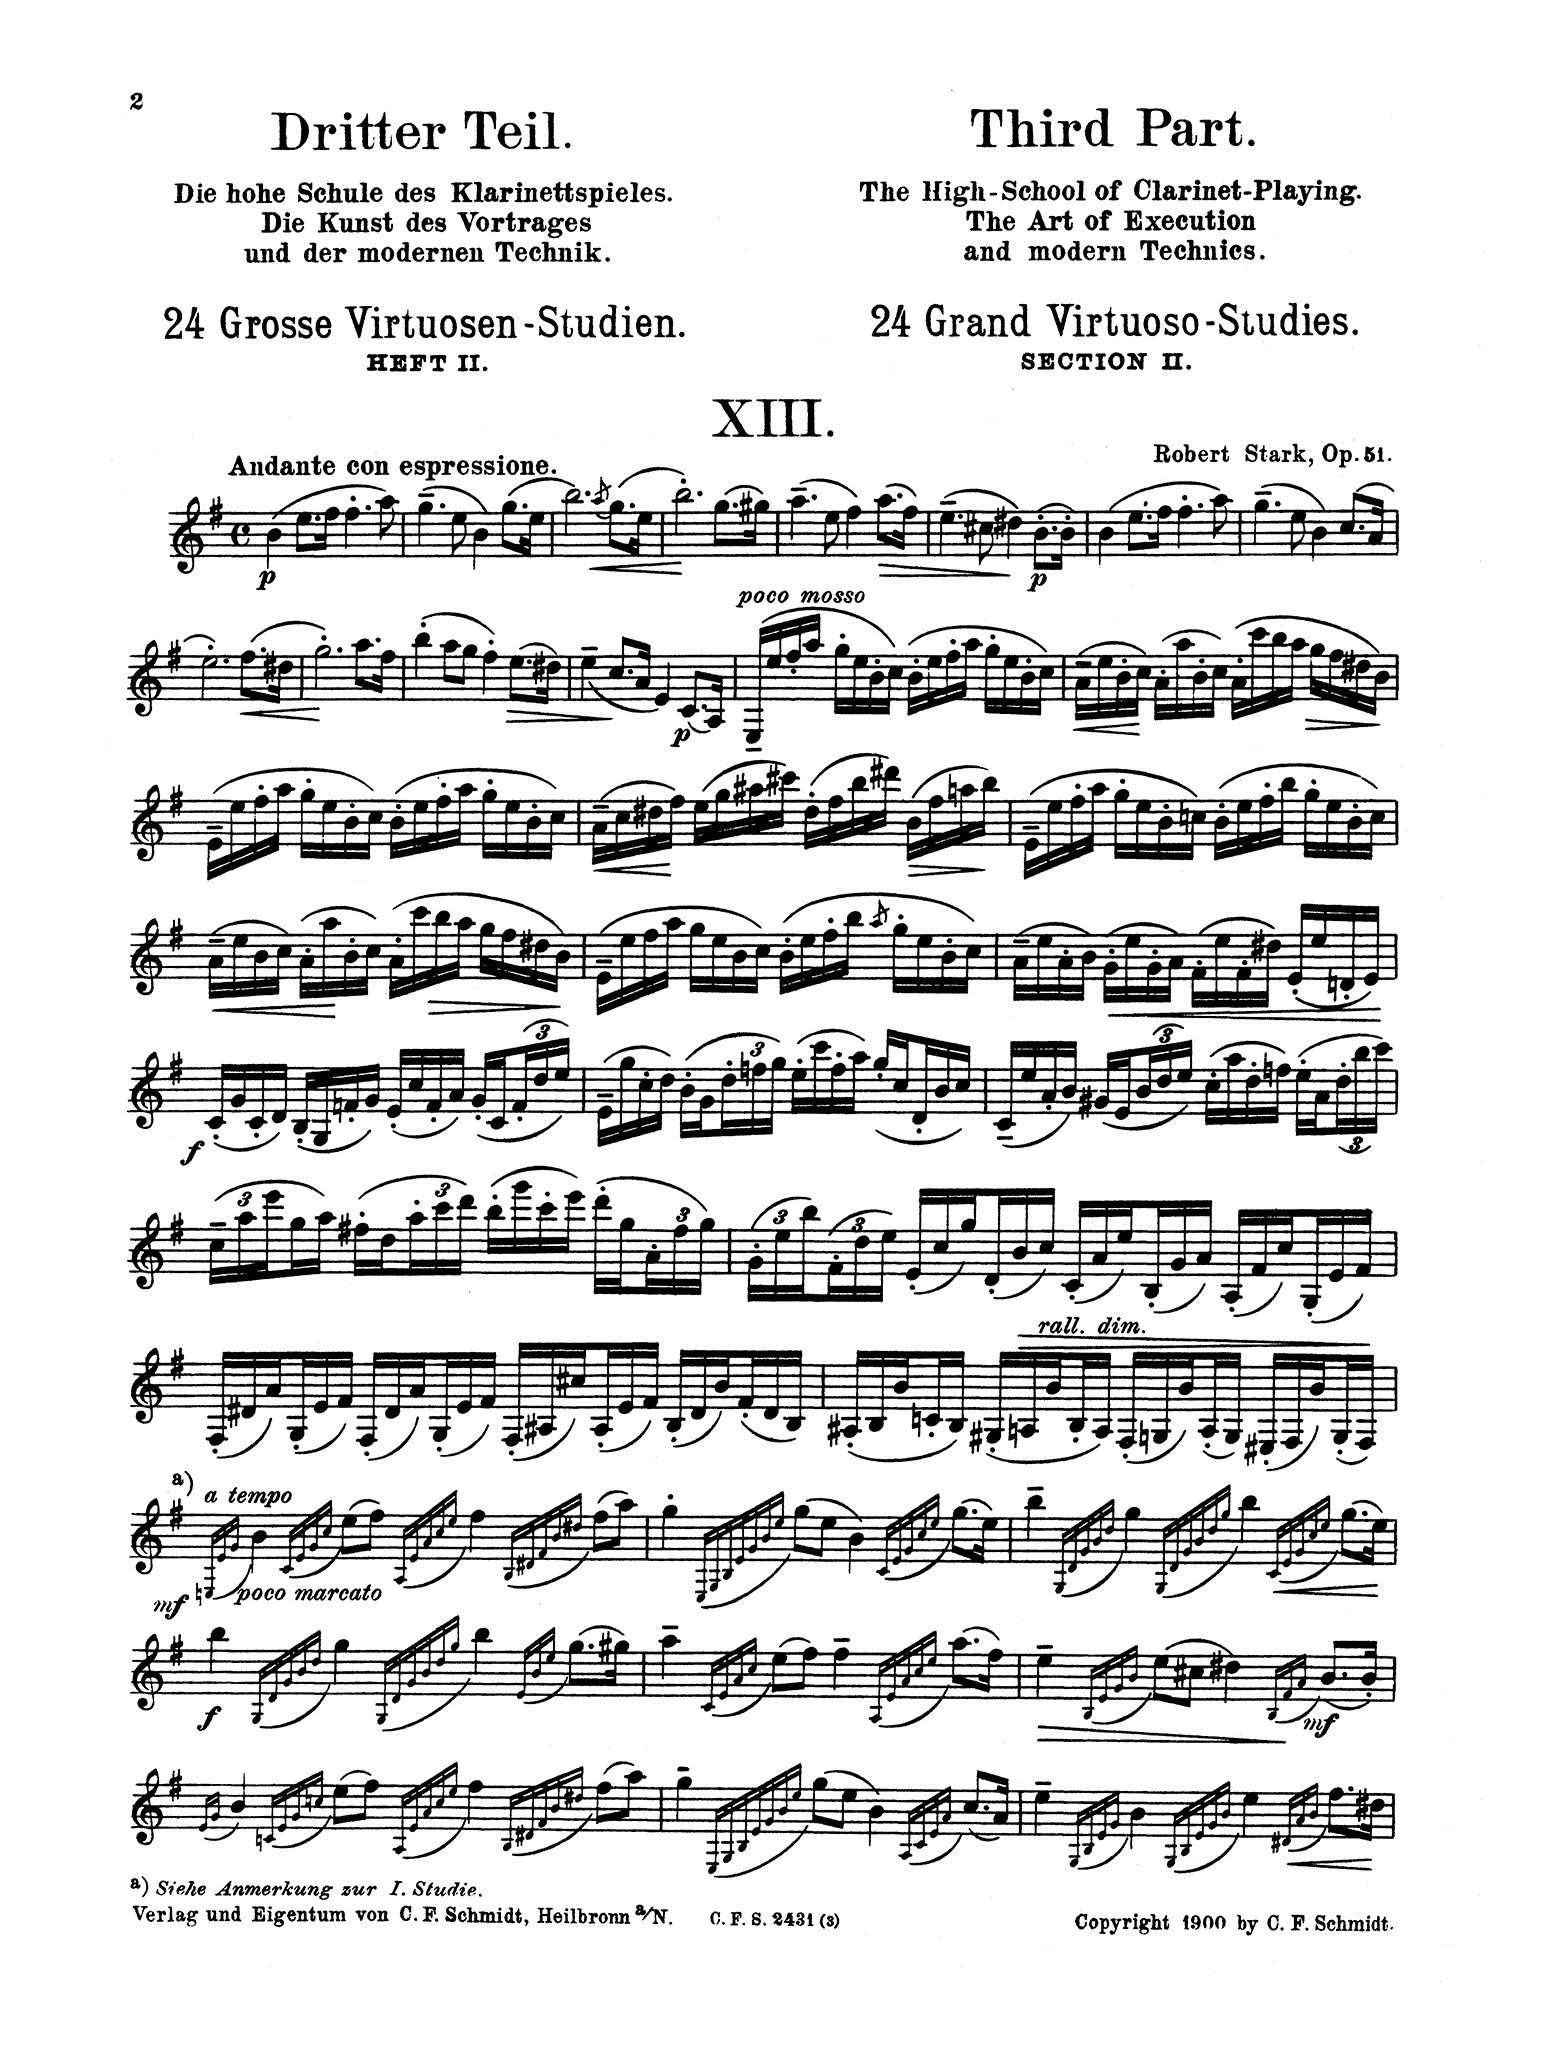 Stark Clarinet Method, Op. 51, Vol. 3 (24 Grand Virtuoso-Studies): Section 2 of 2 page 2